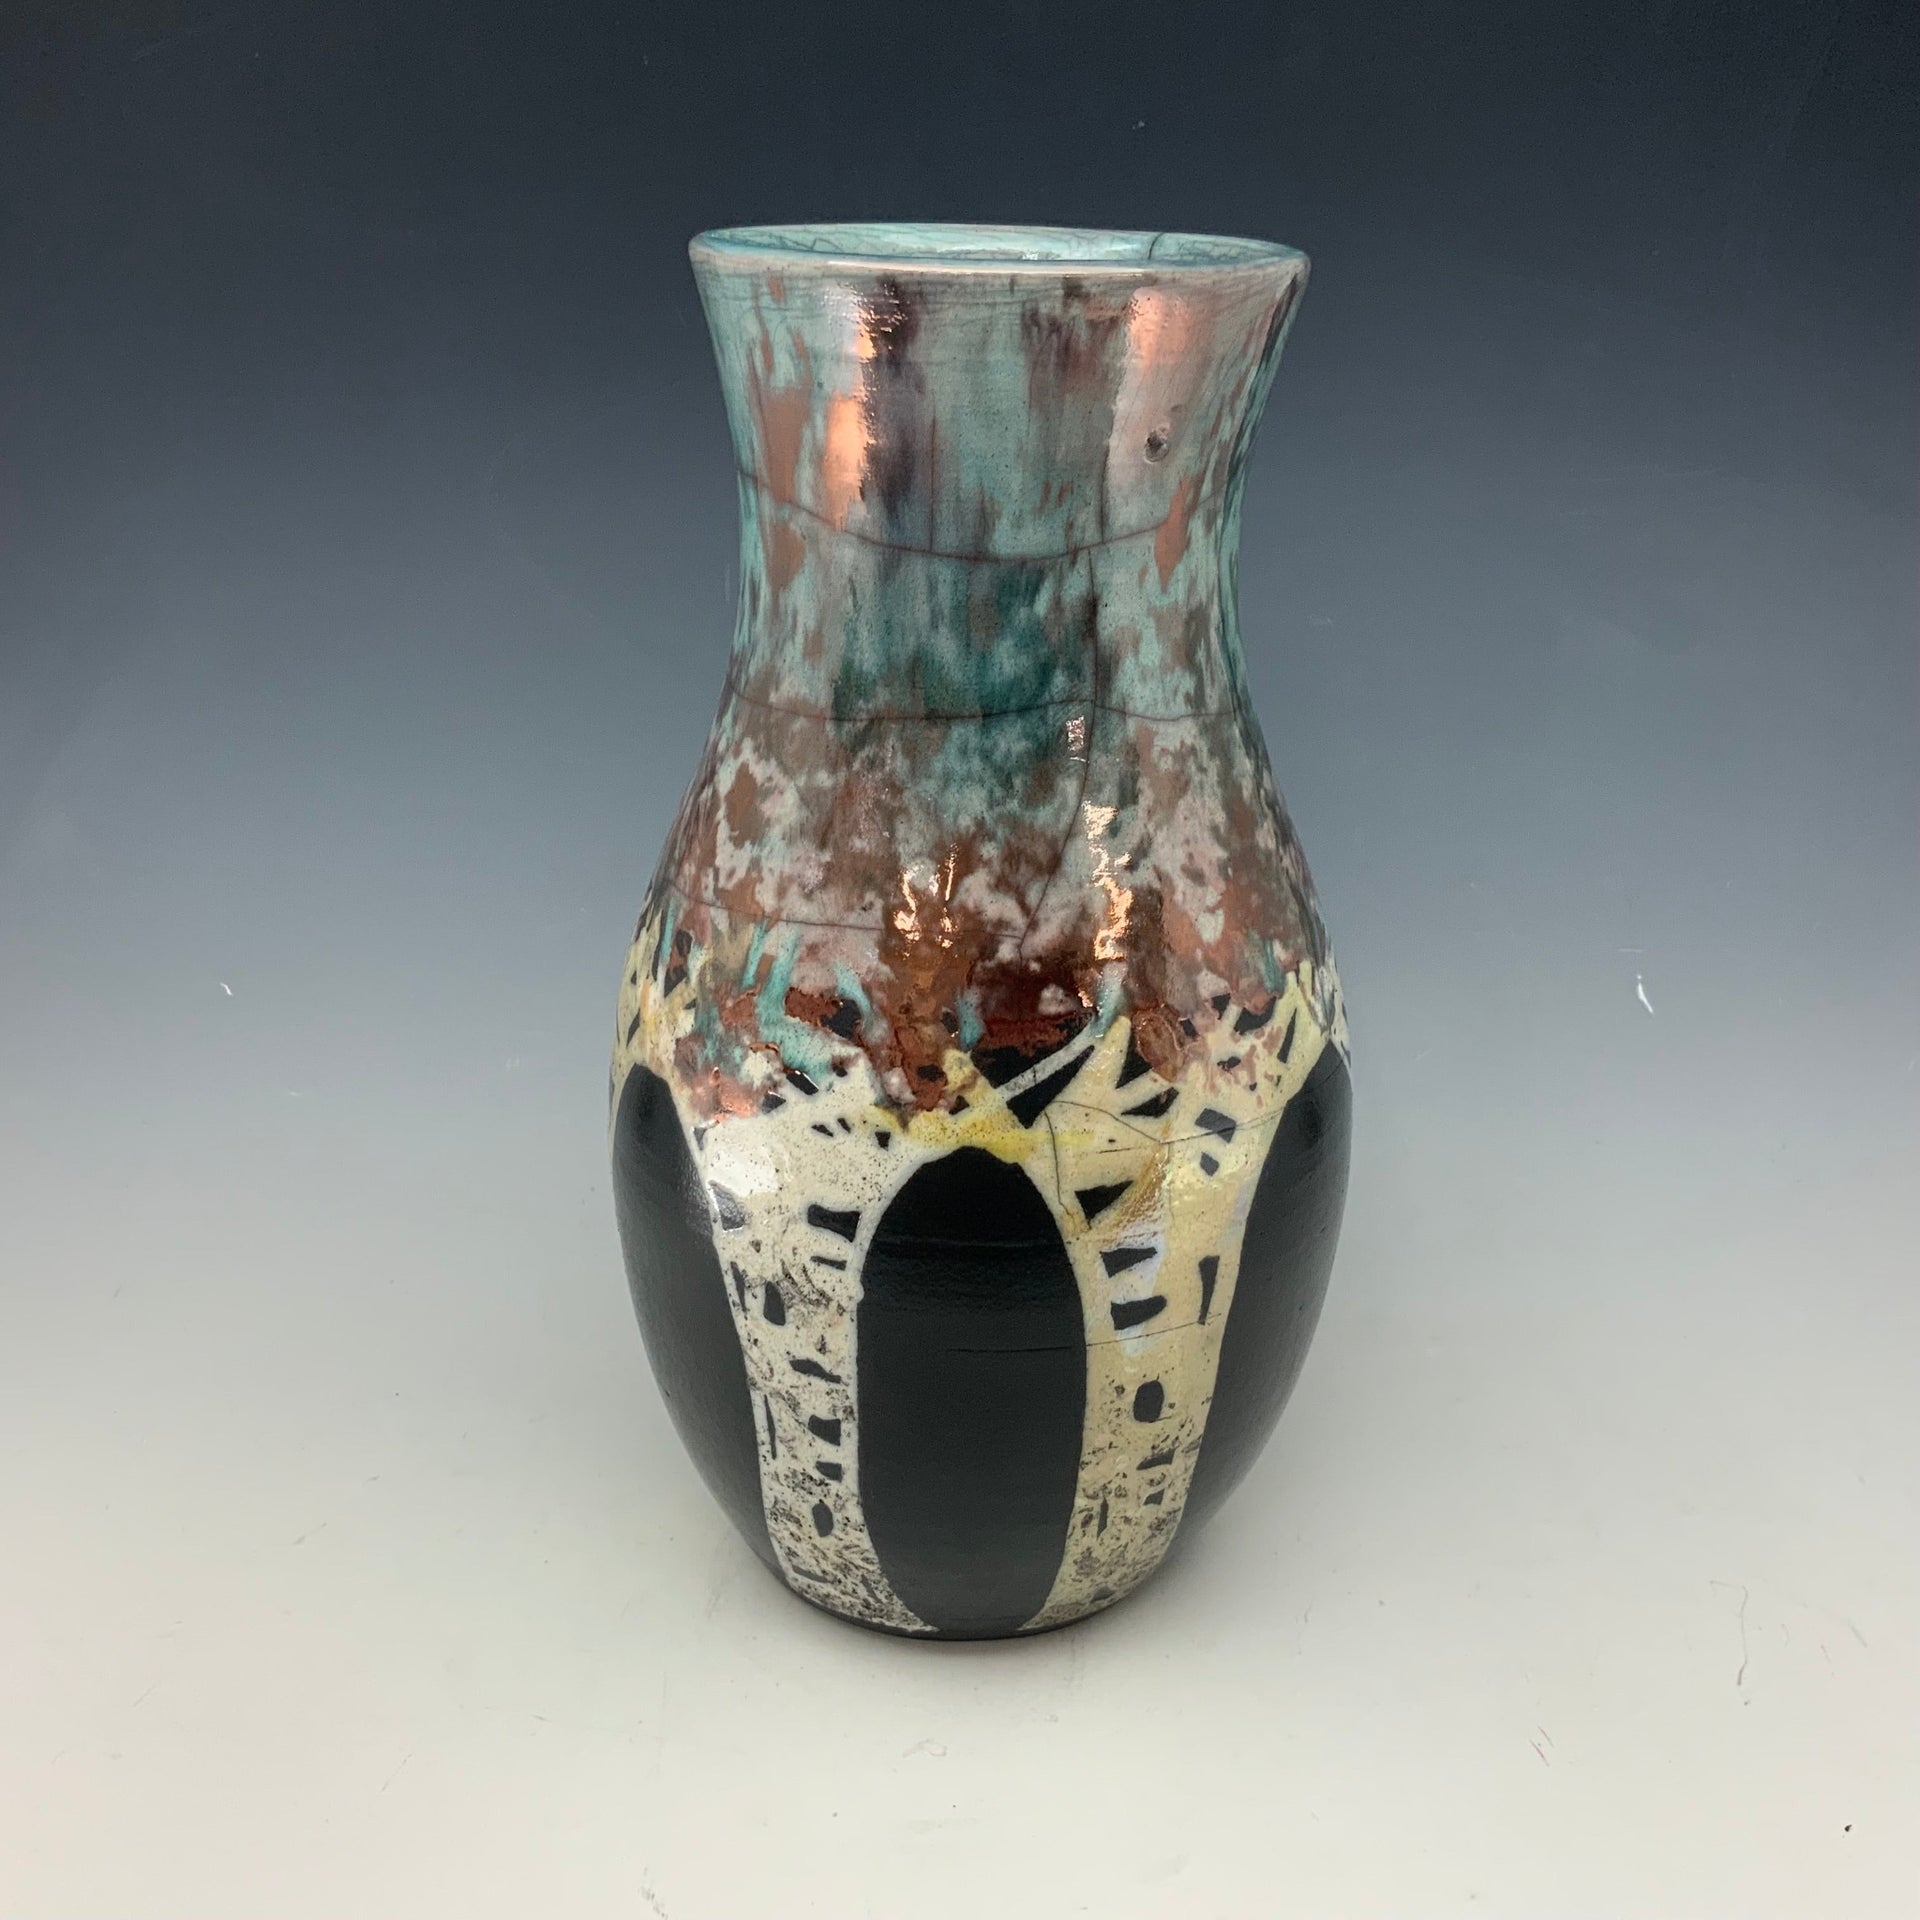 Raku vase with Aspen trees